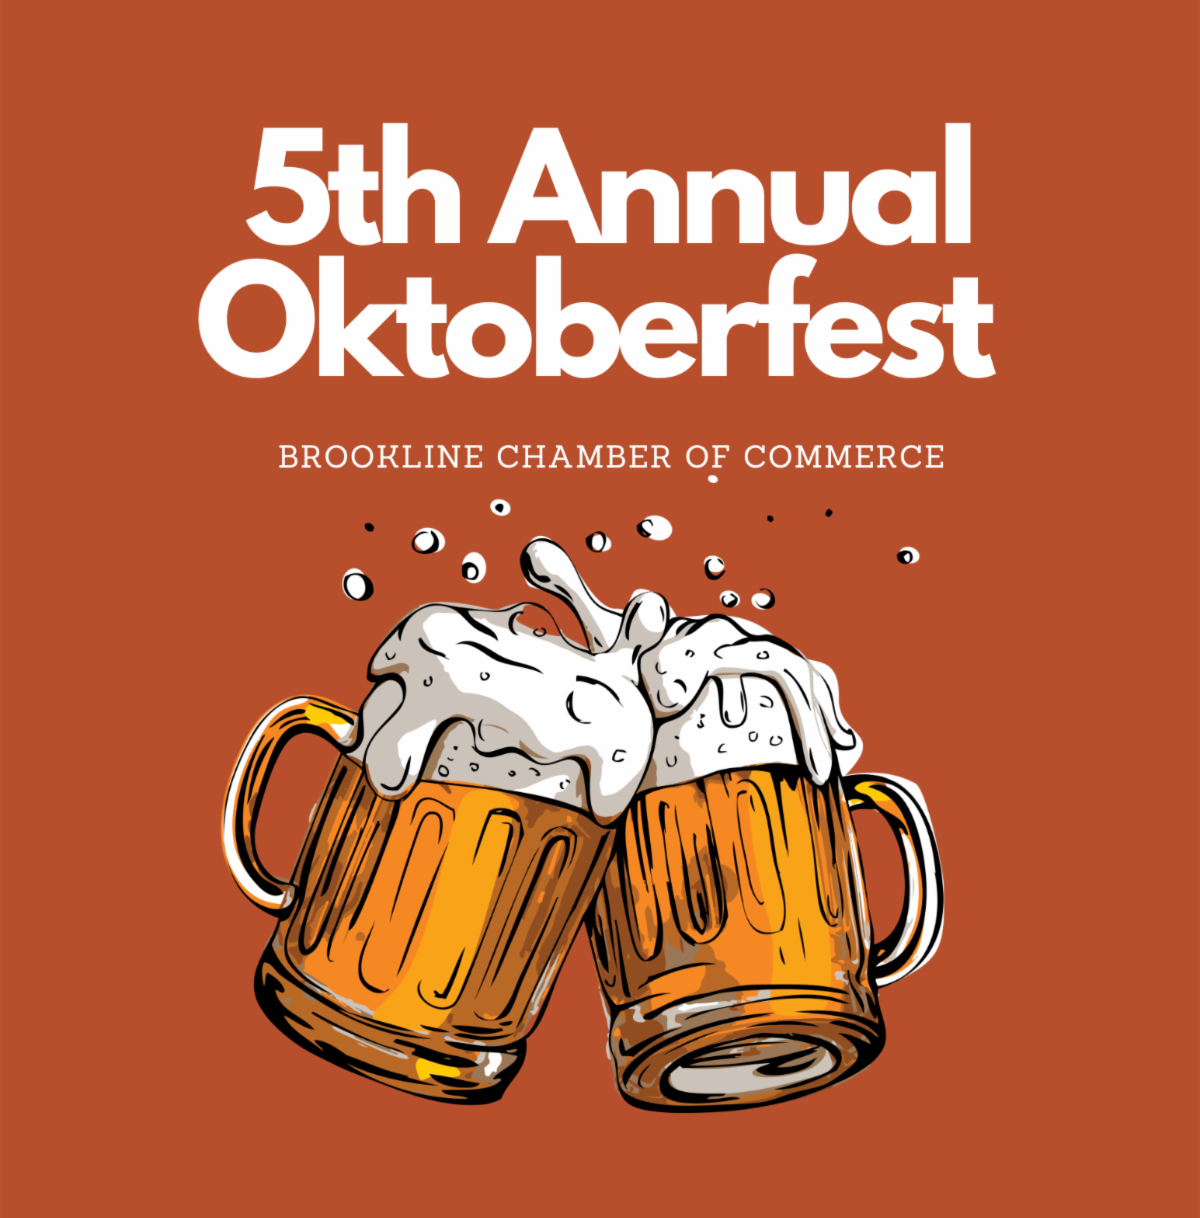 5th Annual Oktoberfest beer mugs clinking